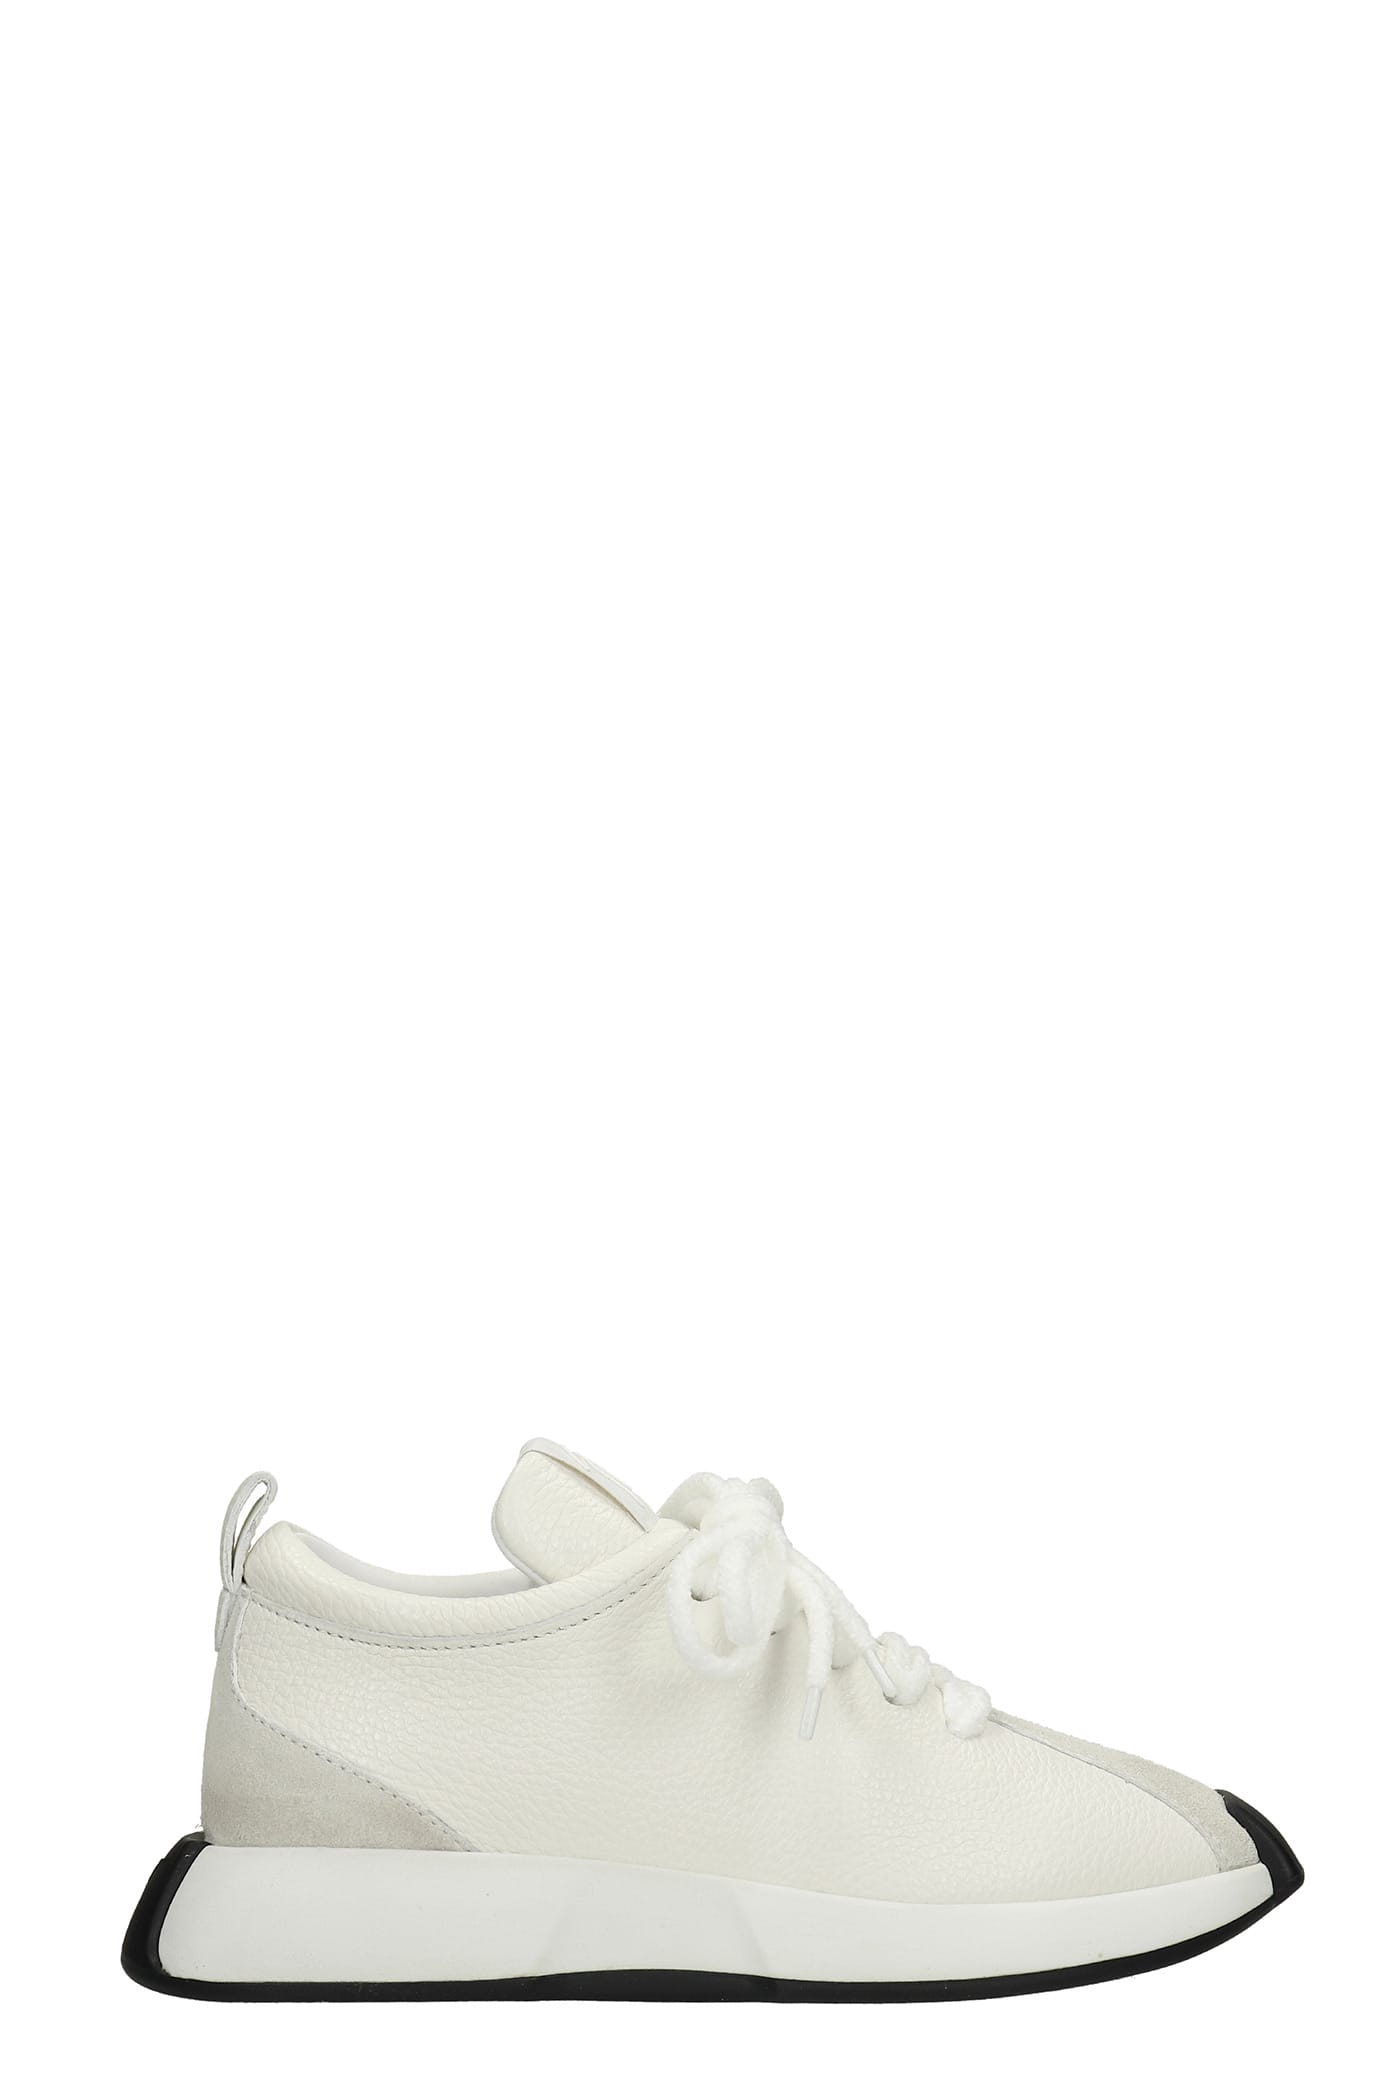 Giuseppe Zanotti Ferox Sneakers In White Suede And Leather